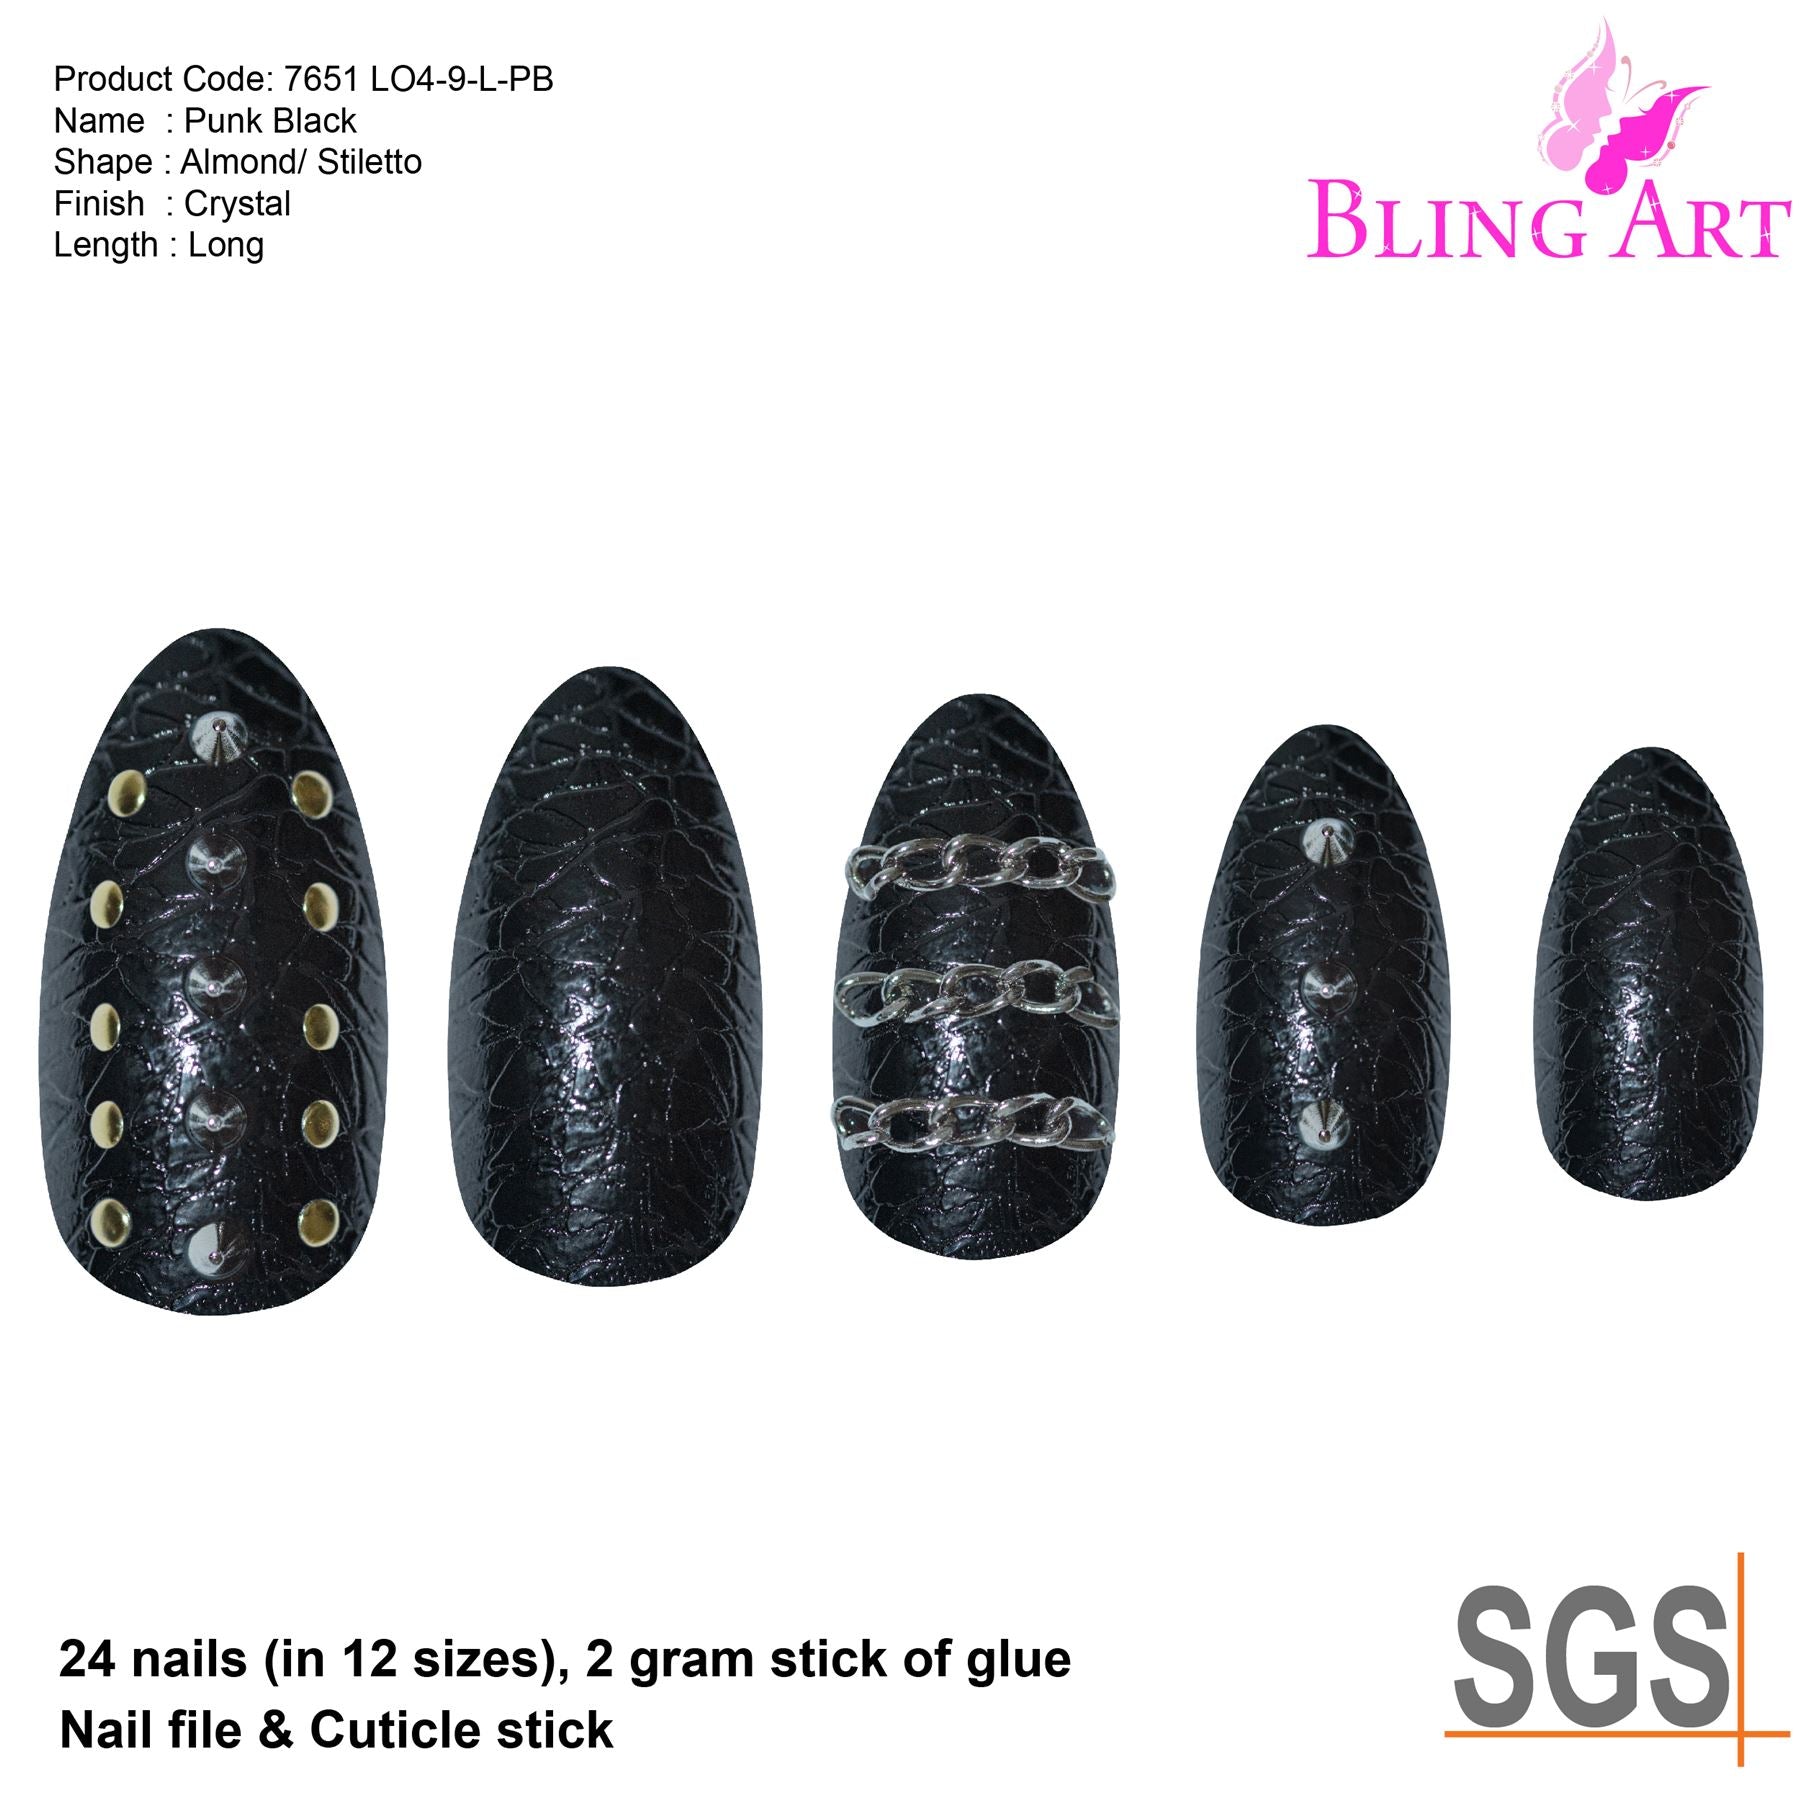 False Nails by Bling Art Black Punk Almond Stiletto Acrylic 24 Fake Long Tips